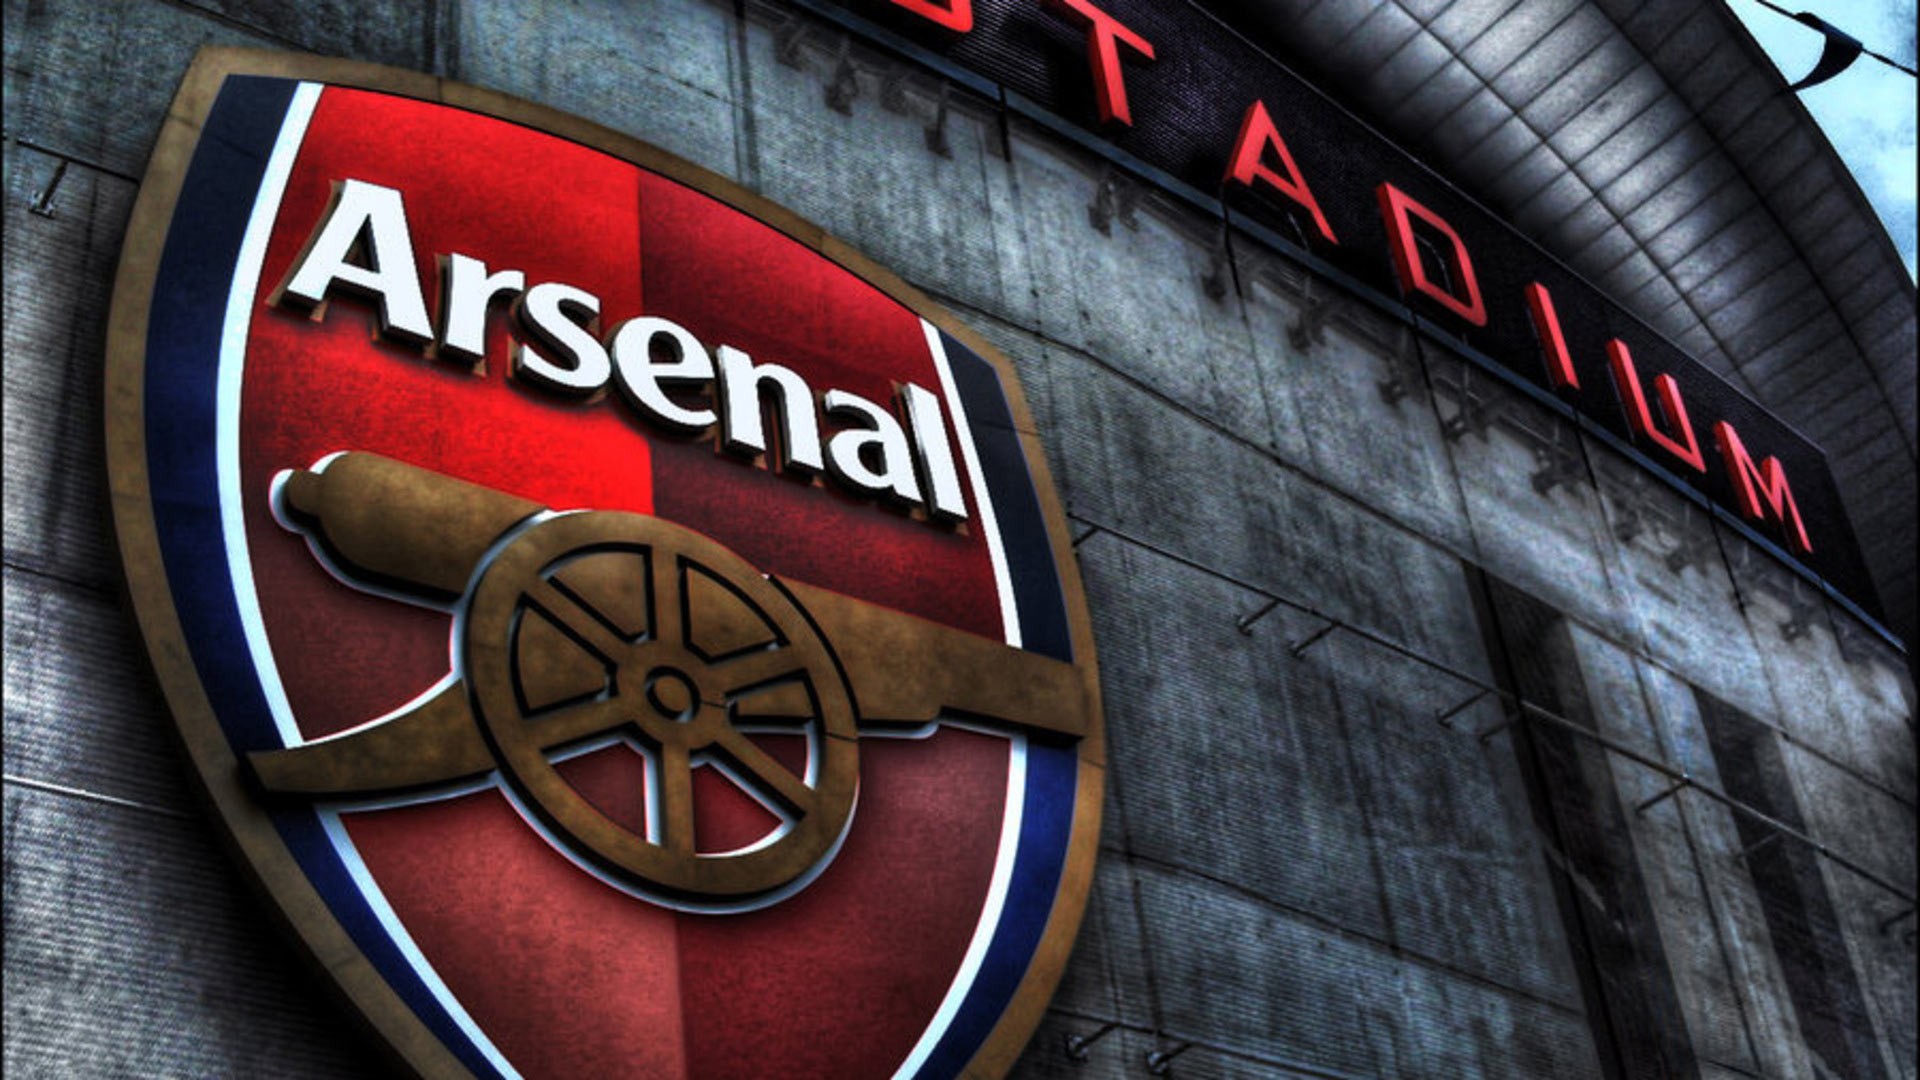 Arsenal Wallpaper For Mac Backgrounds | Best Football Wallpaper HD | Arsenal  wallpapers, Mac backgrounds, Football wallpaper